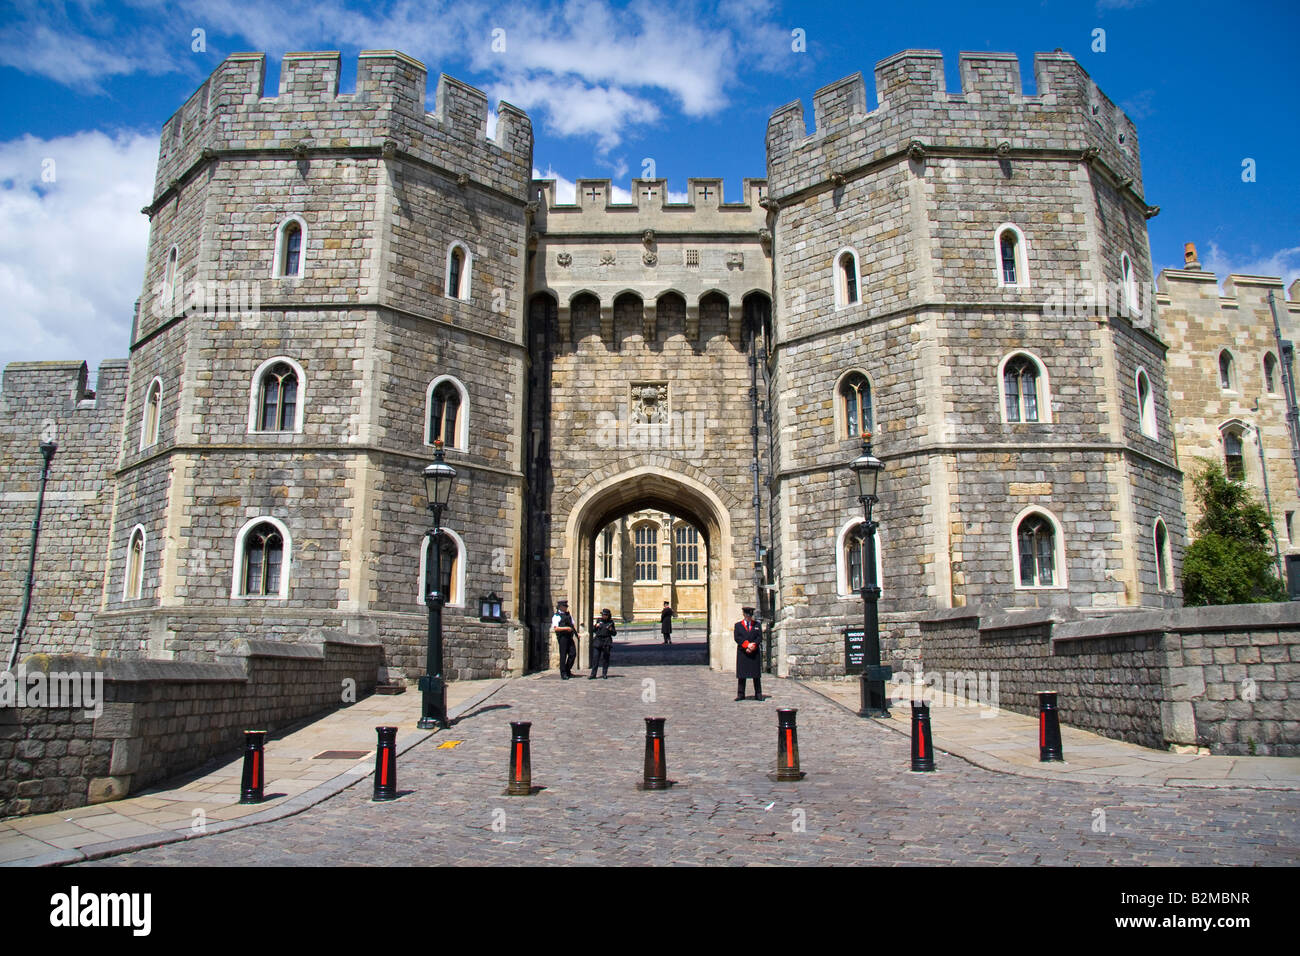 Entrance to Windsor Castle Stock Photo